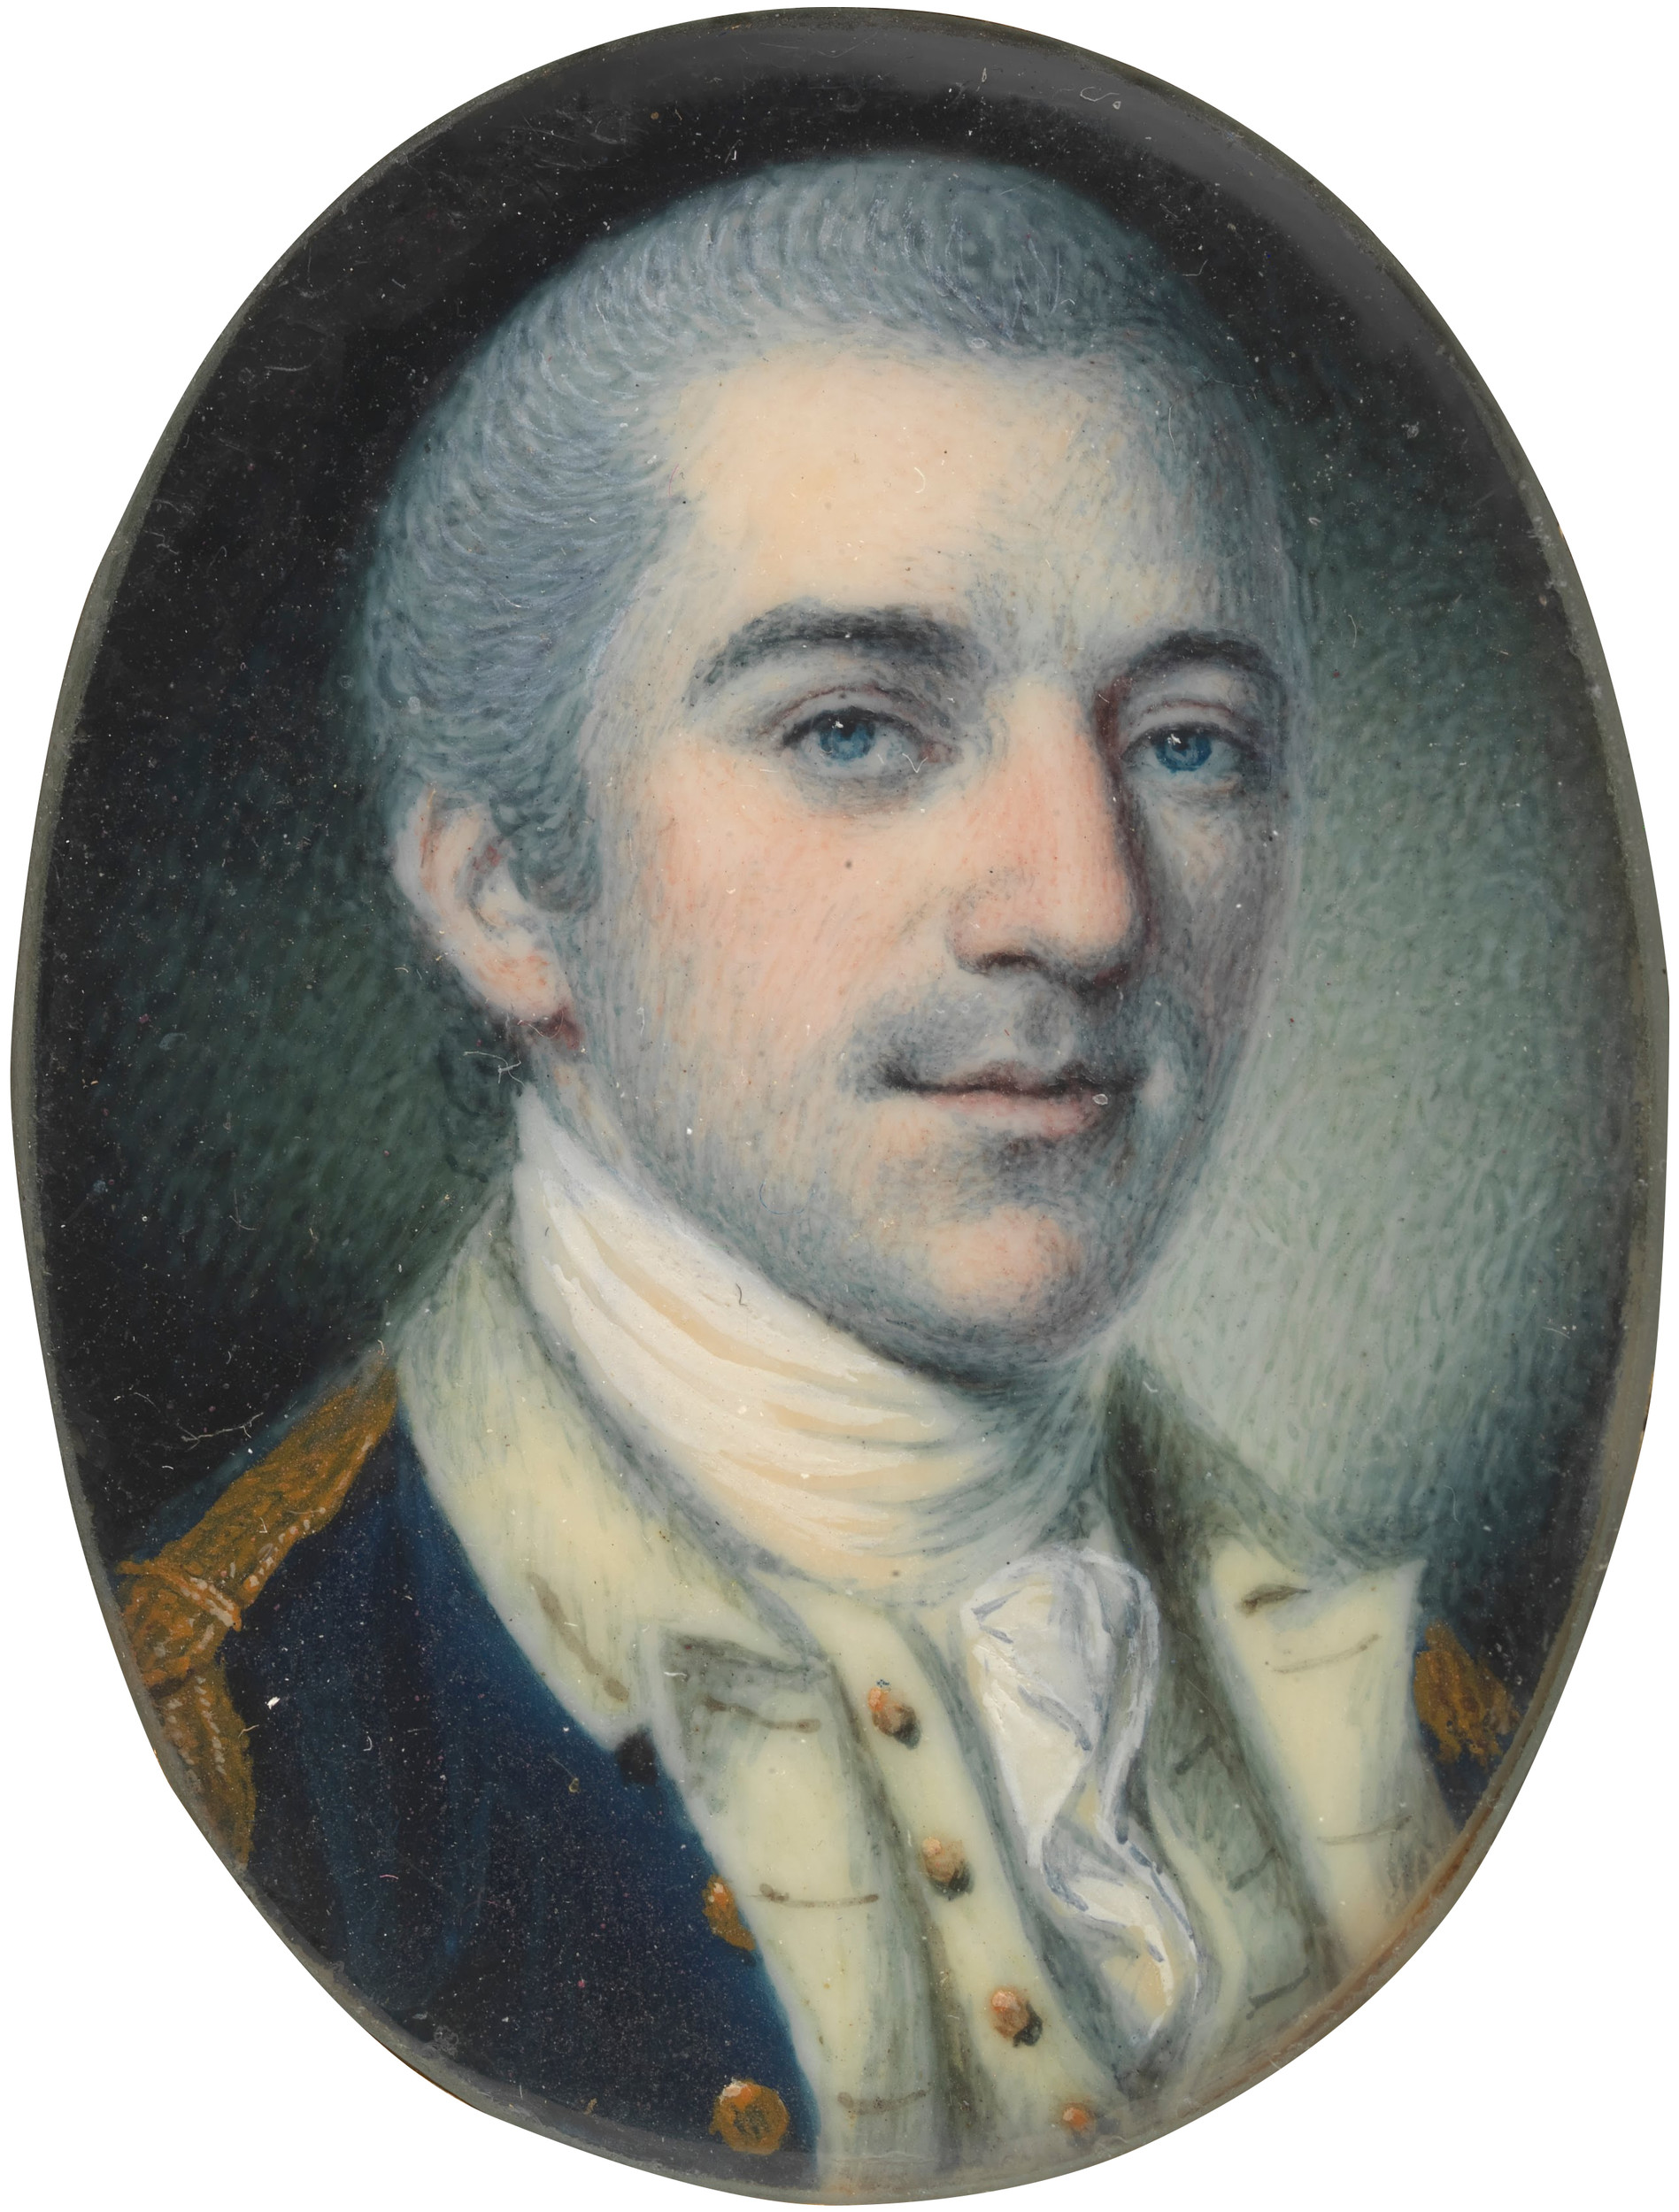 A 1780 portrait of John Laurens, by Charles Willson Peale.